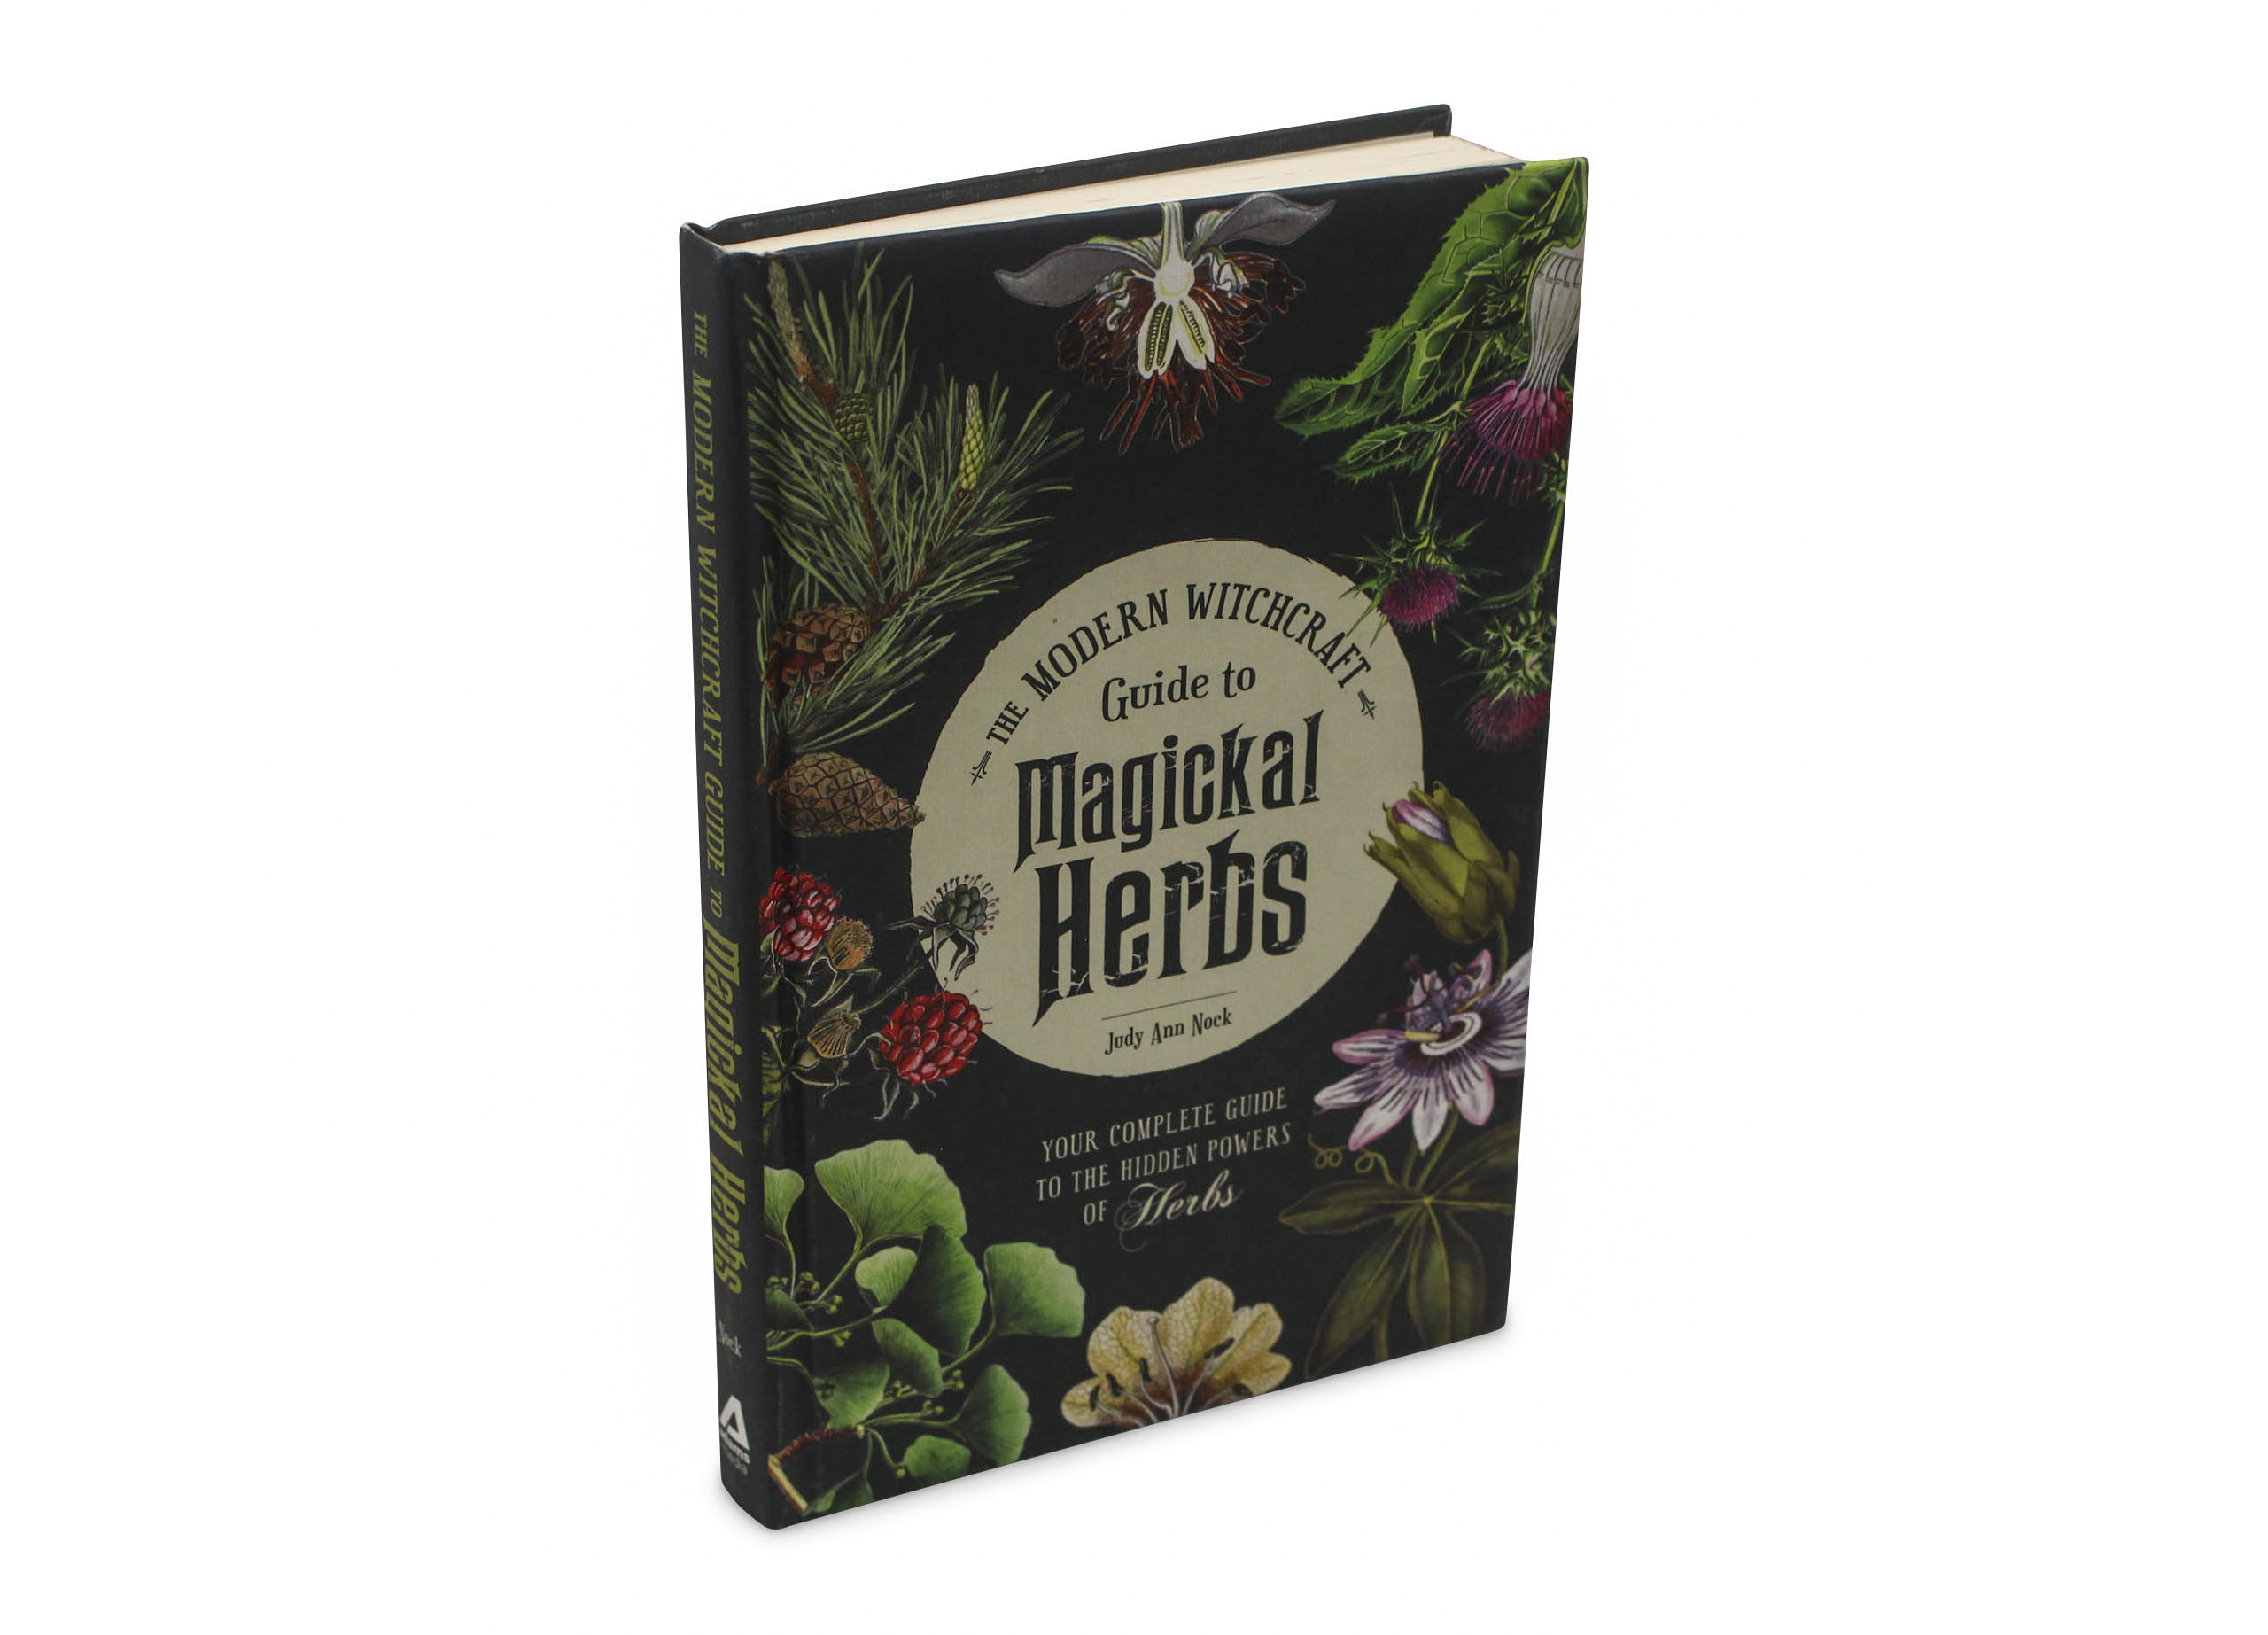 Magickal Herbs - Crystal Dreams